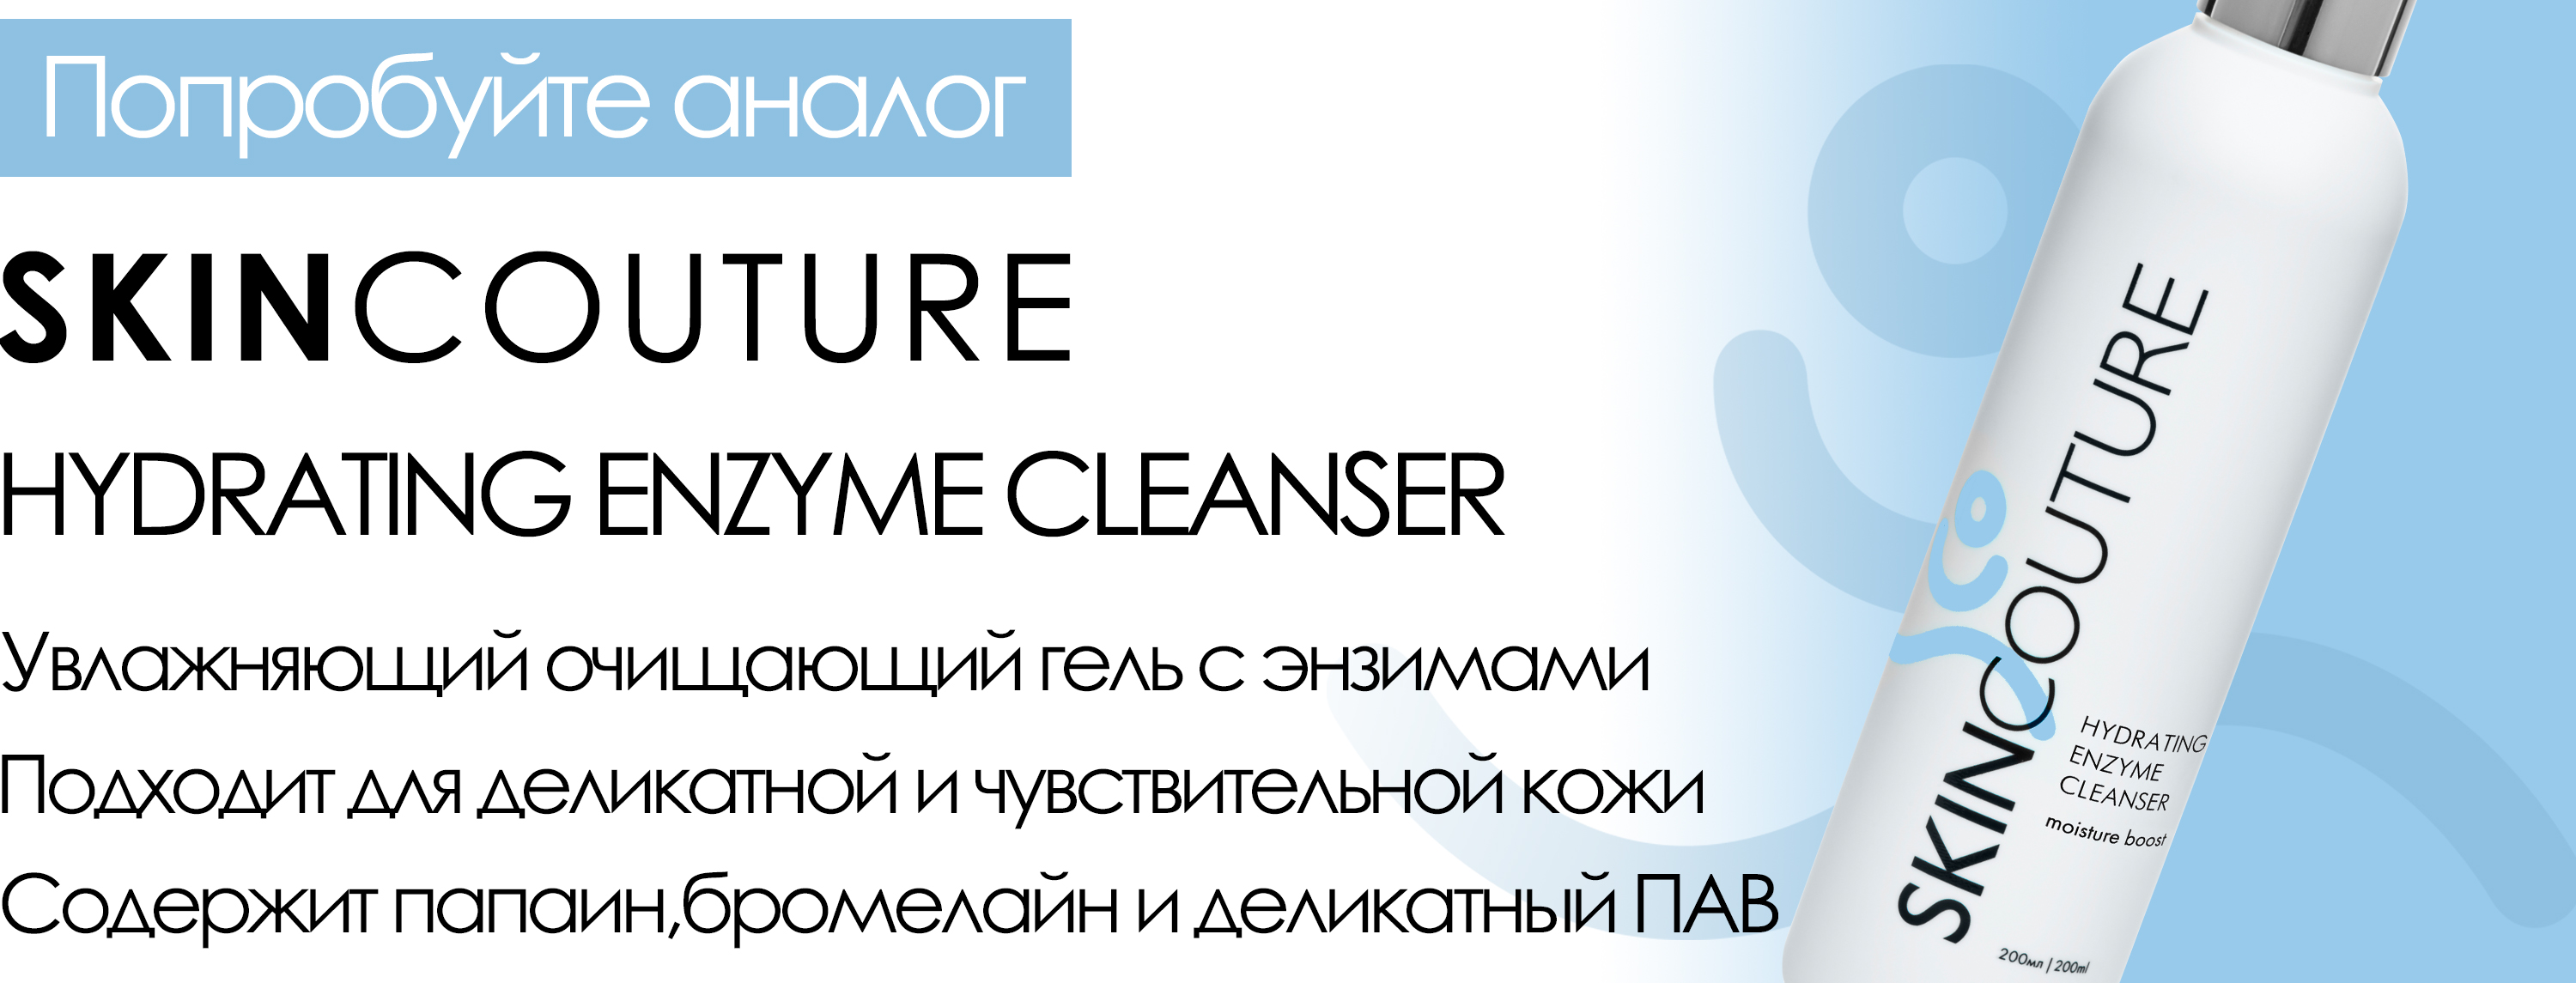 HYDRATING ENZYME CLEANSER | Увлажняющий очищающий гель с энзимами, для лица